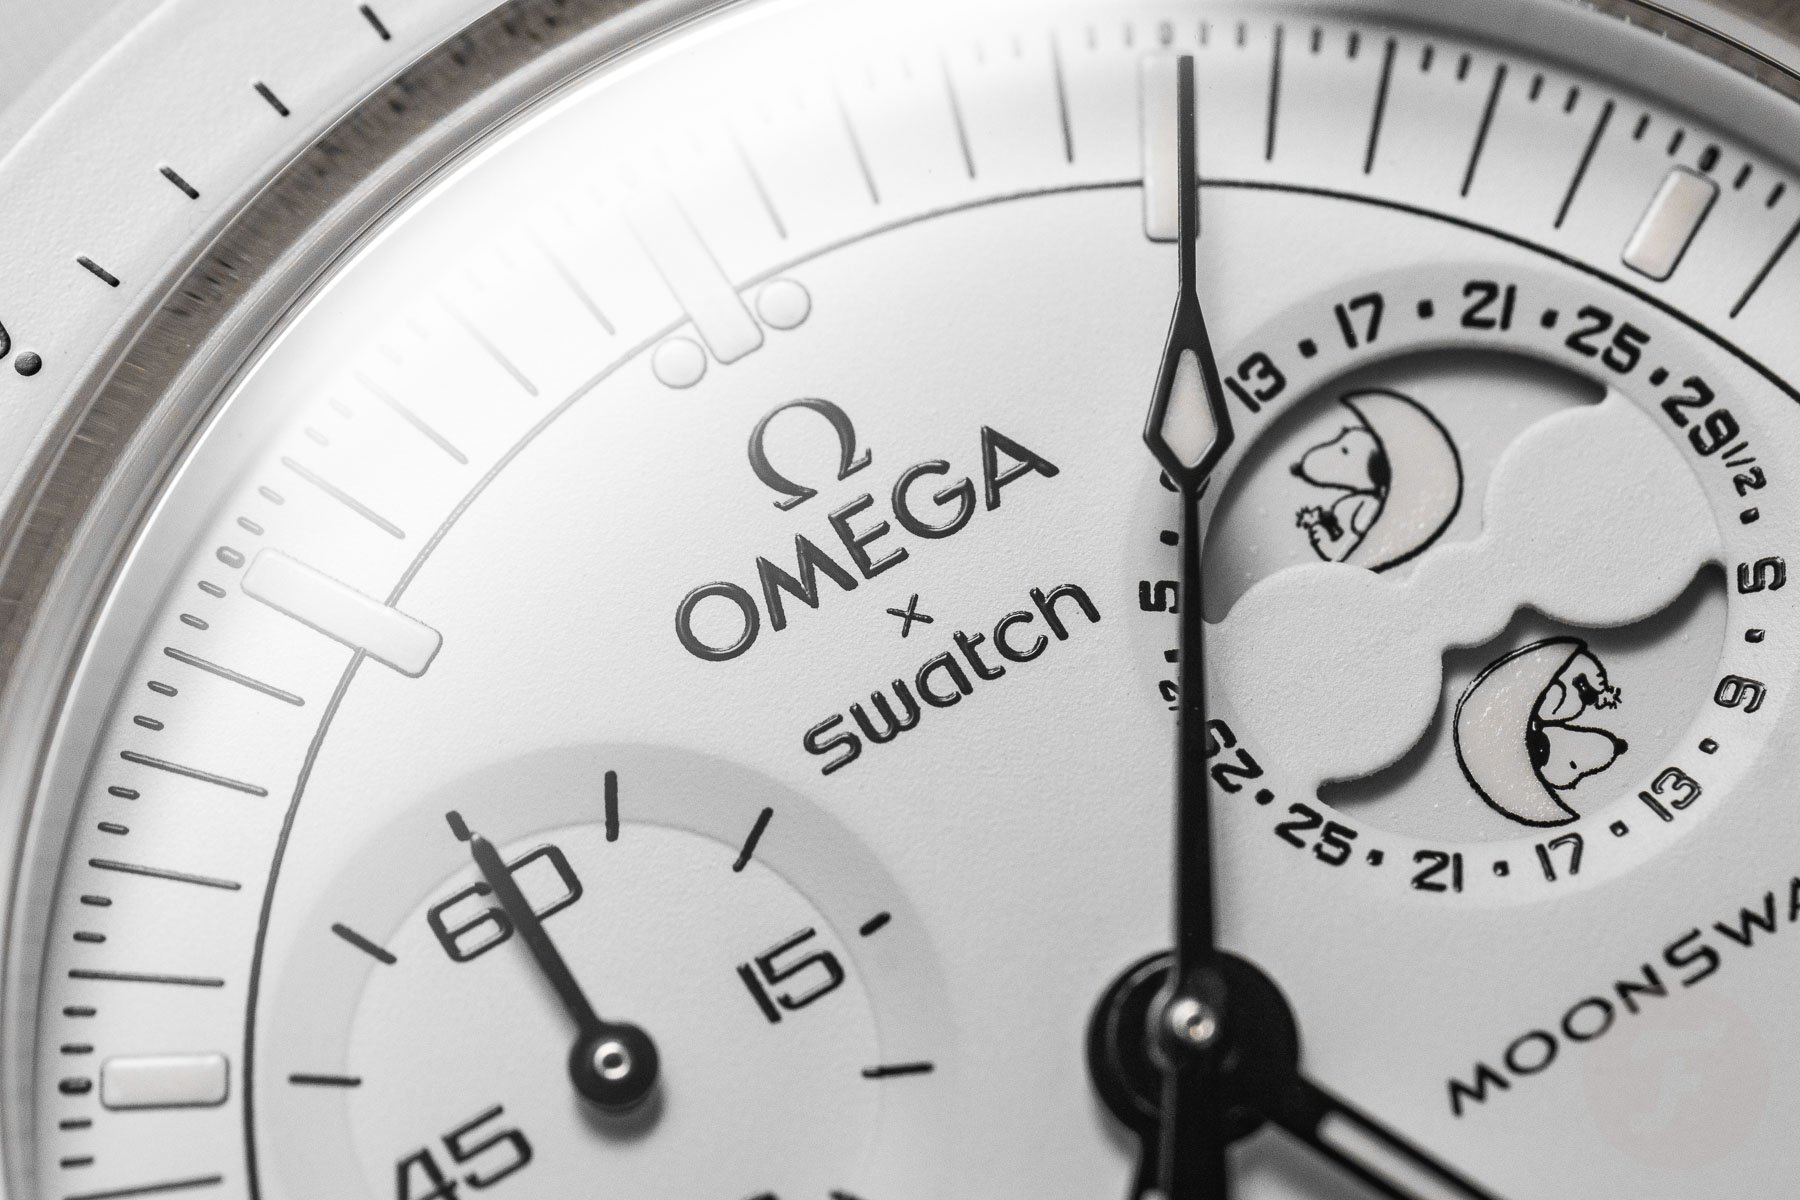 Обзор доступных часов от Omega: MoonSwatch Snoopy Mission To The Moonphase